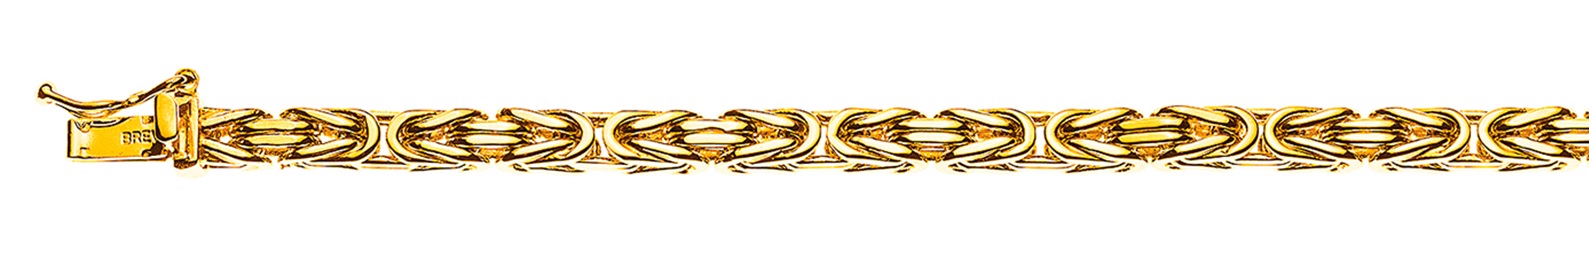 AURONOS Prestige Bracelet 18k yellow gold king chain 3.5mm 19cm 